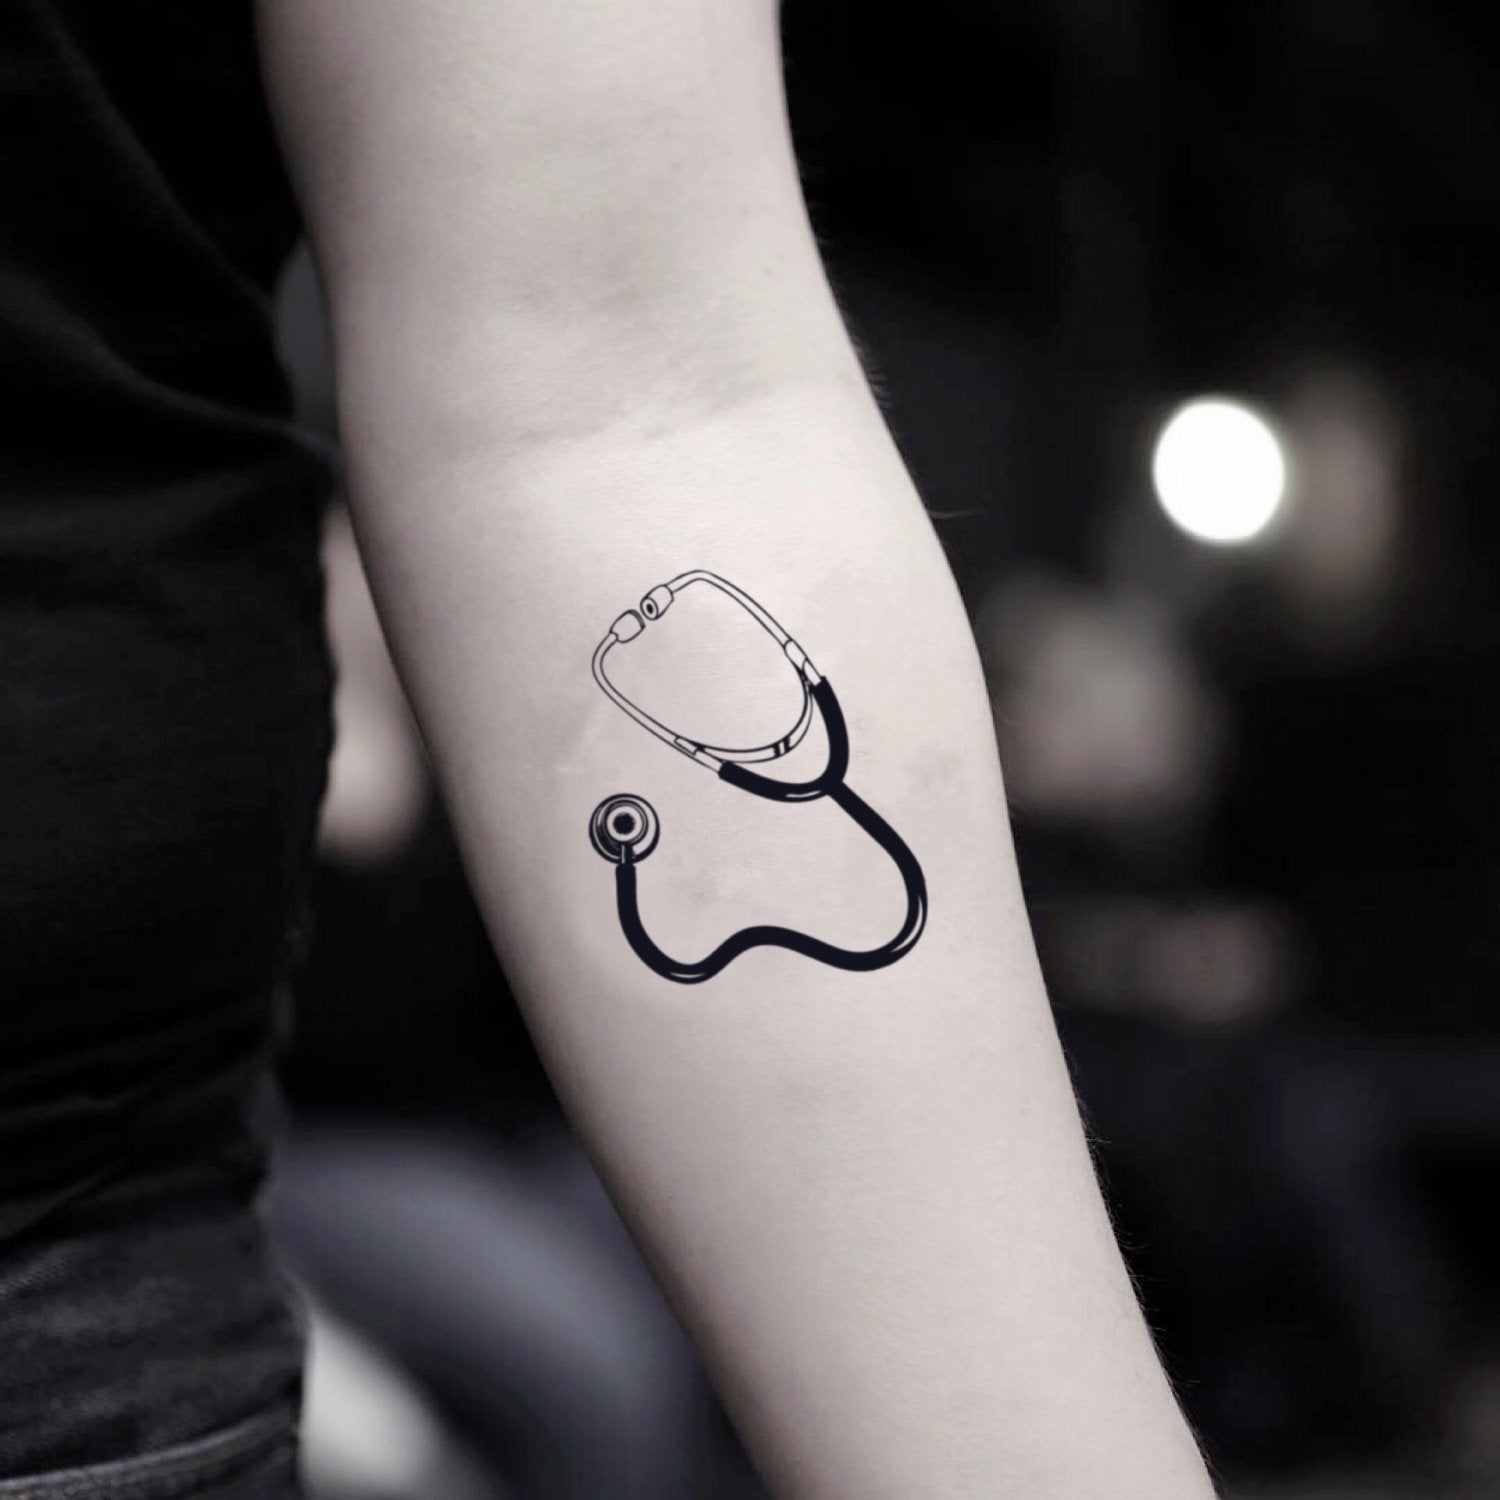 fake small doctor stethoscope illustrative temporary tattoo sticker design idea on inner arm